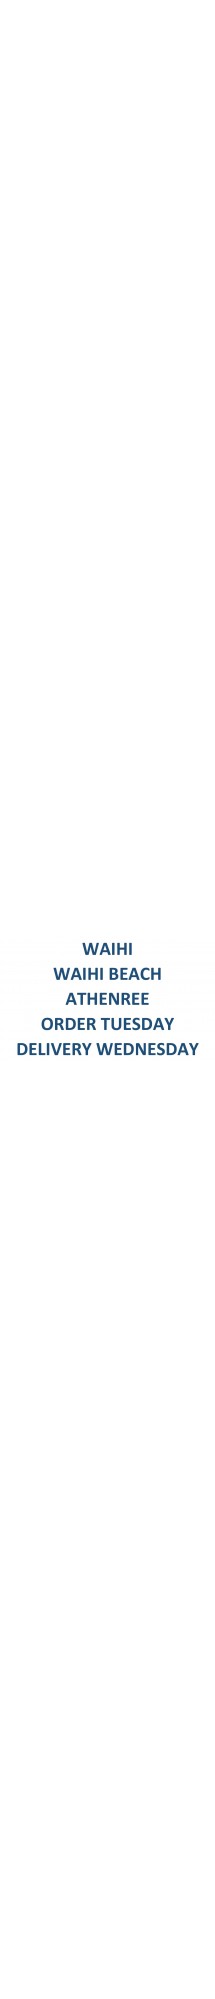 Waihi Waihi Beach Athenree